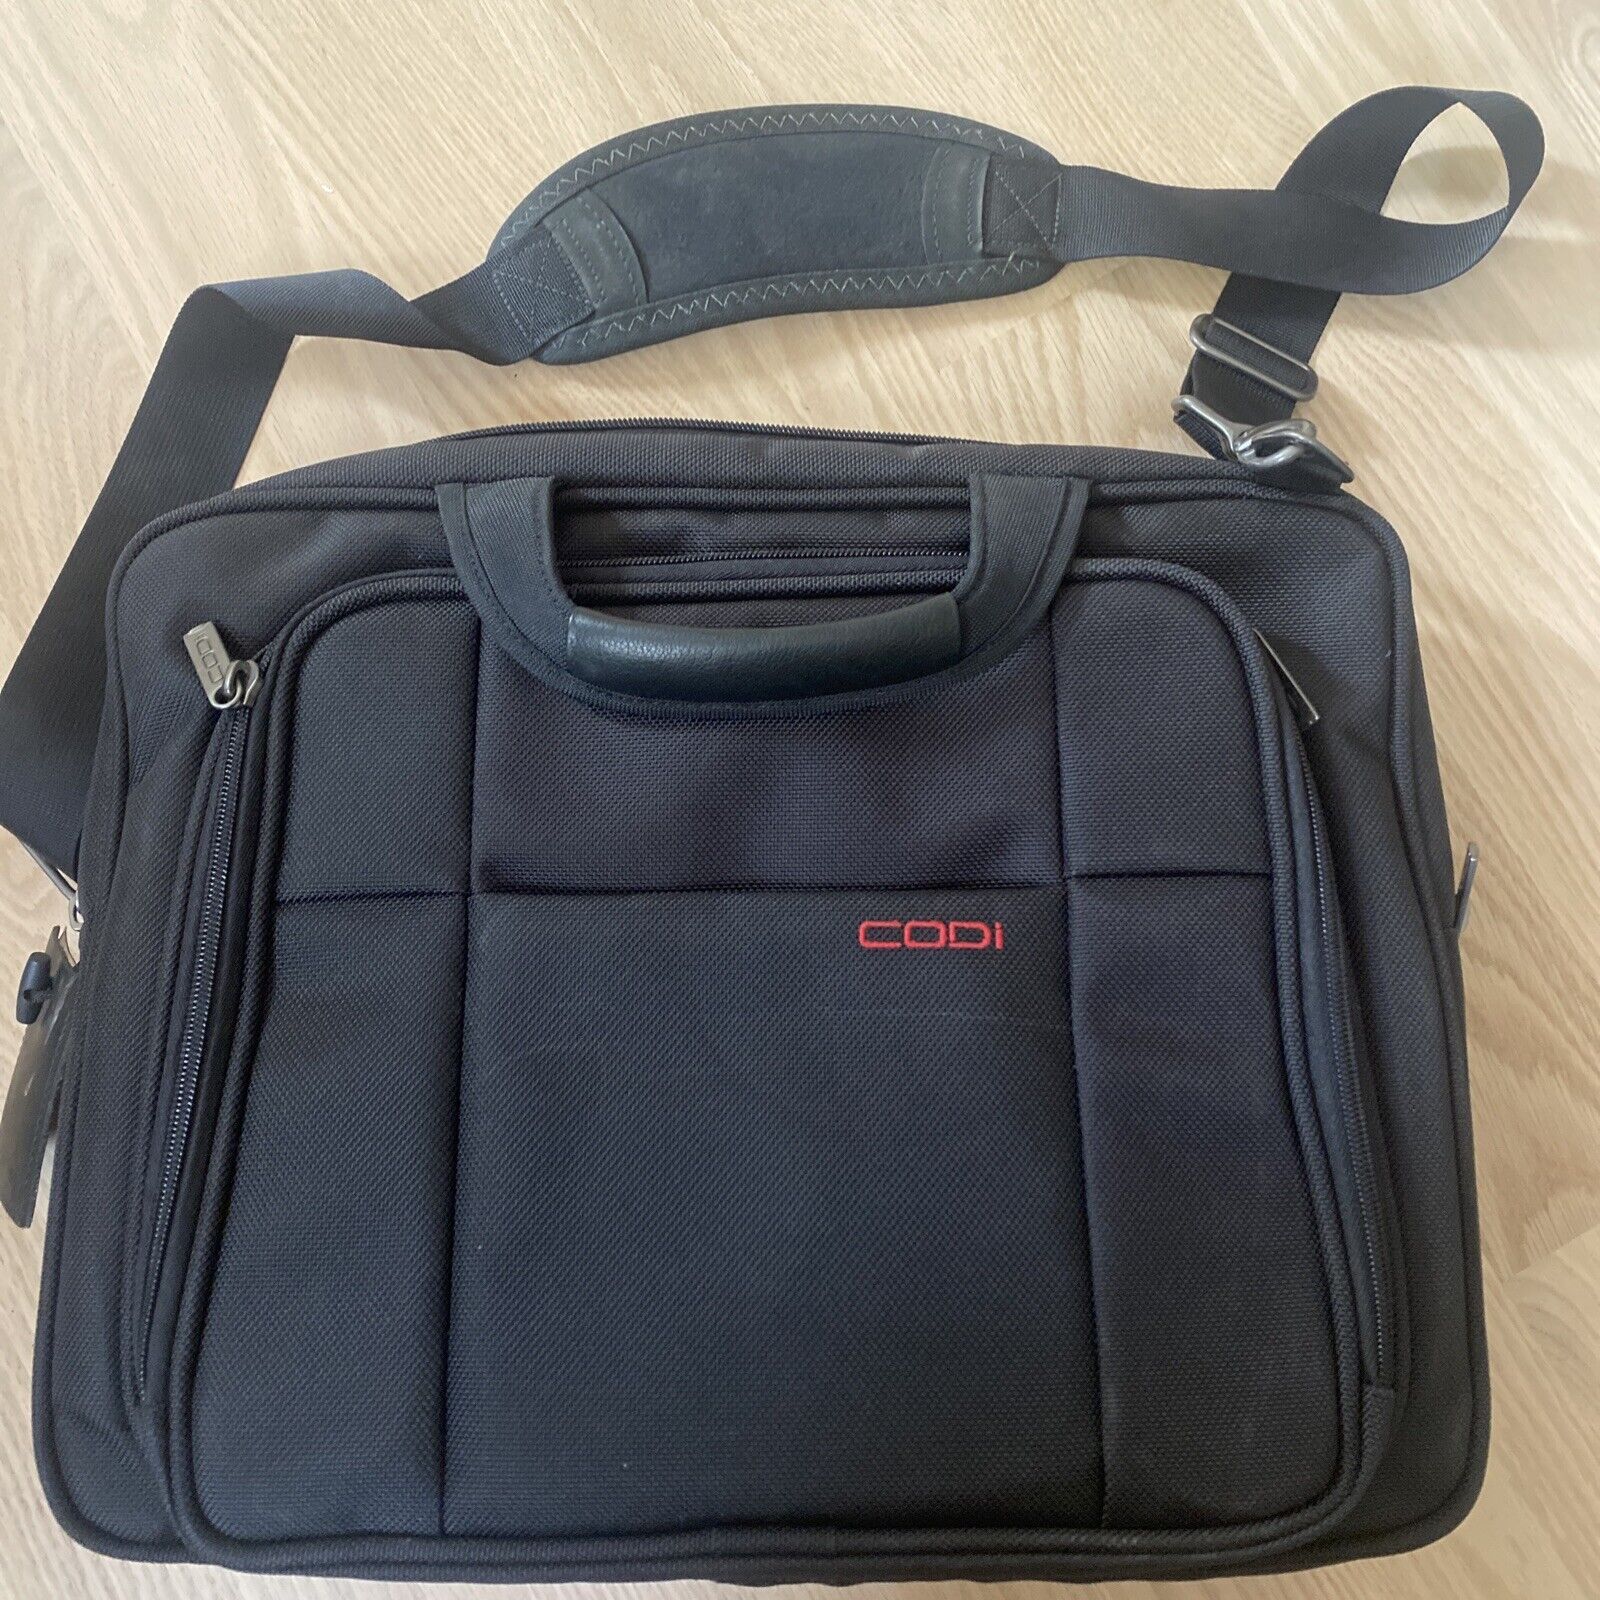 Codi Black Laptop Bag / Briefcase w/Shoulder Strap